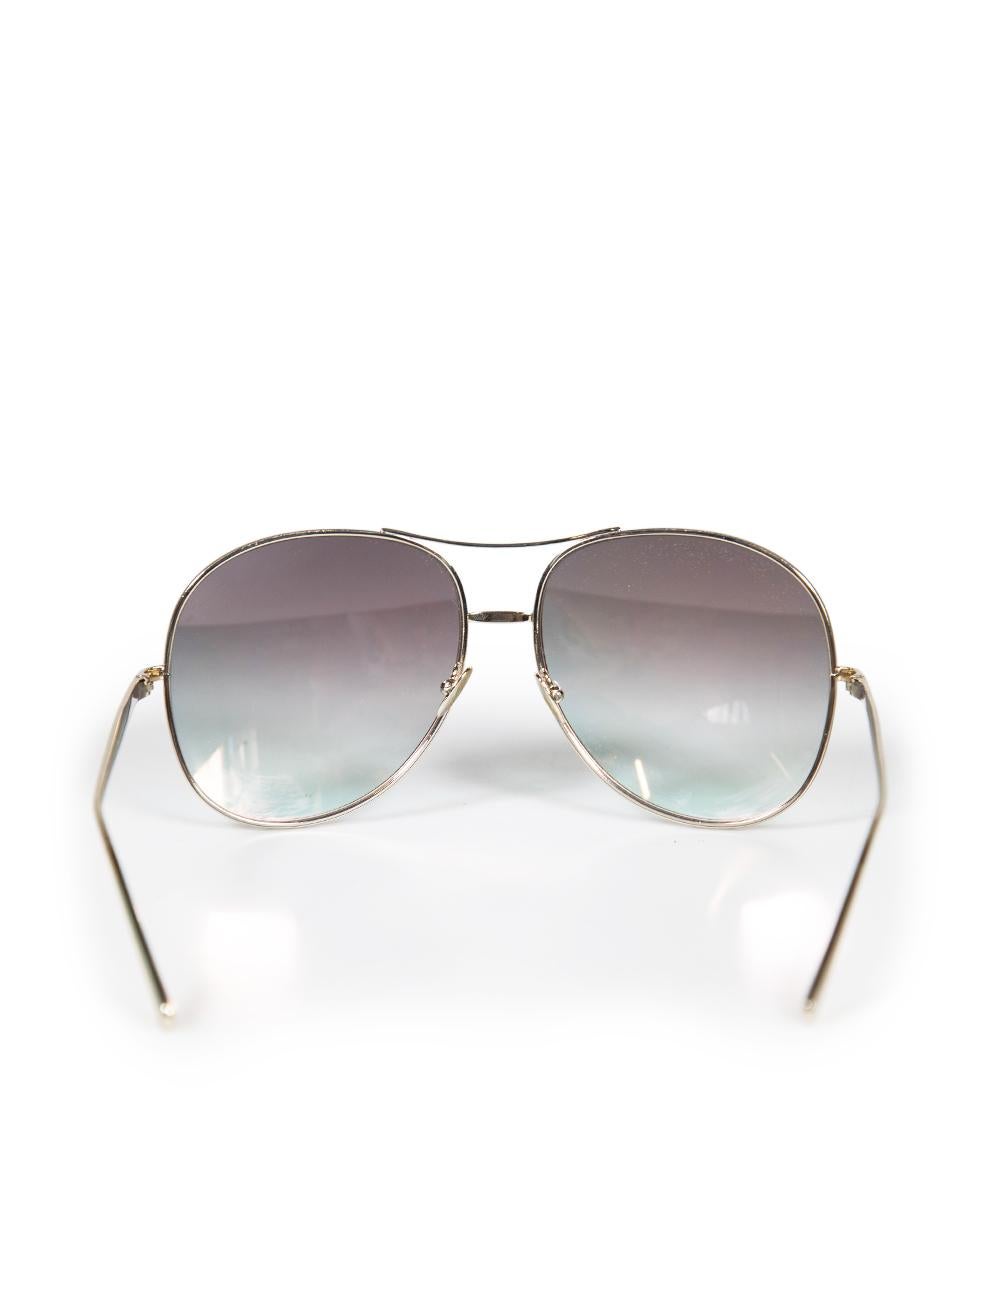 Chloé Silver Nola CE127S Aviator Sunglasses In Good Condition For Sale In London, GB